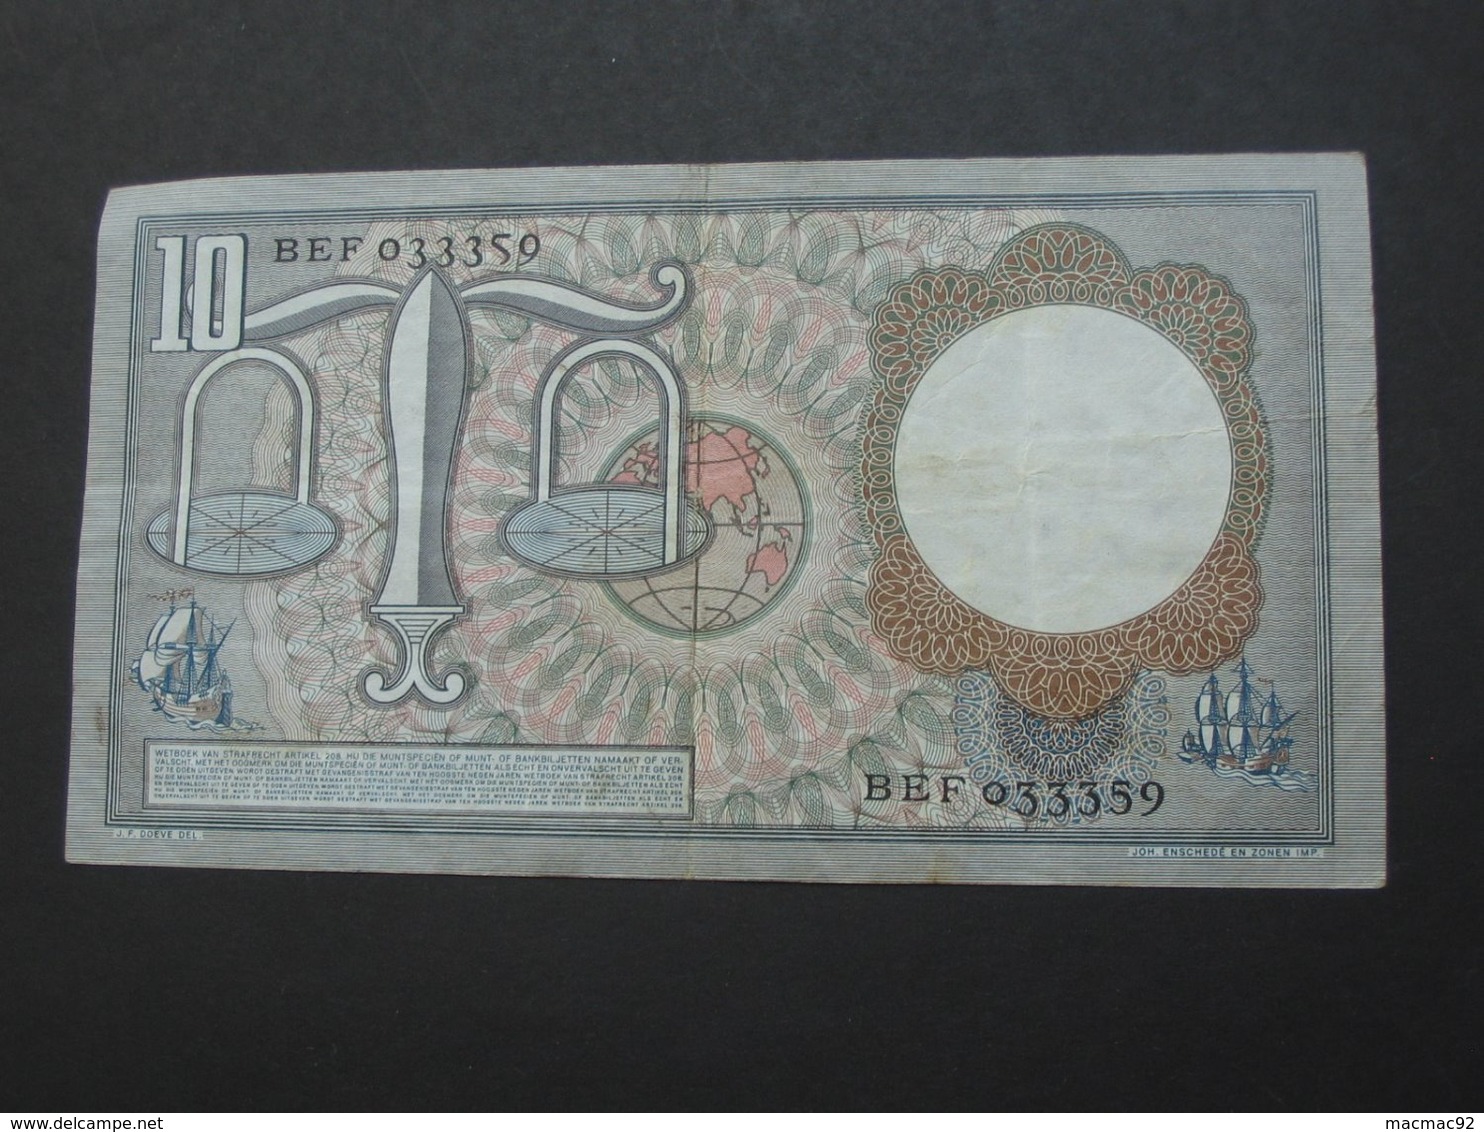 10 Tien Gulden 1953 De Nederlandsche Bank  **** EN  ACHAT IMMEDIAT  **** - 10 Gulden